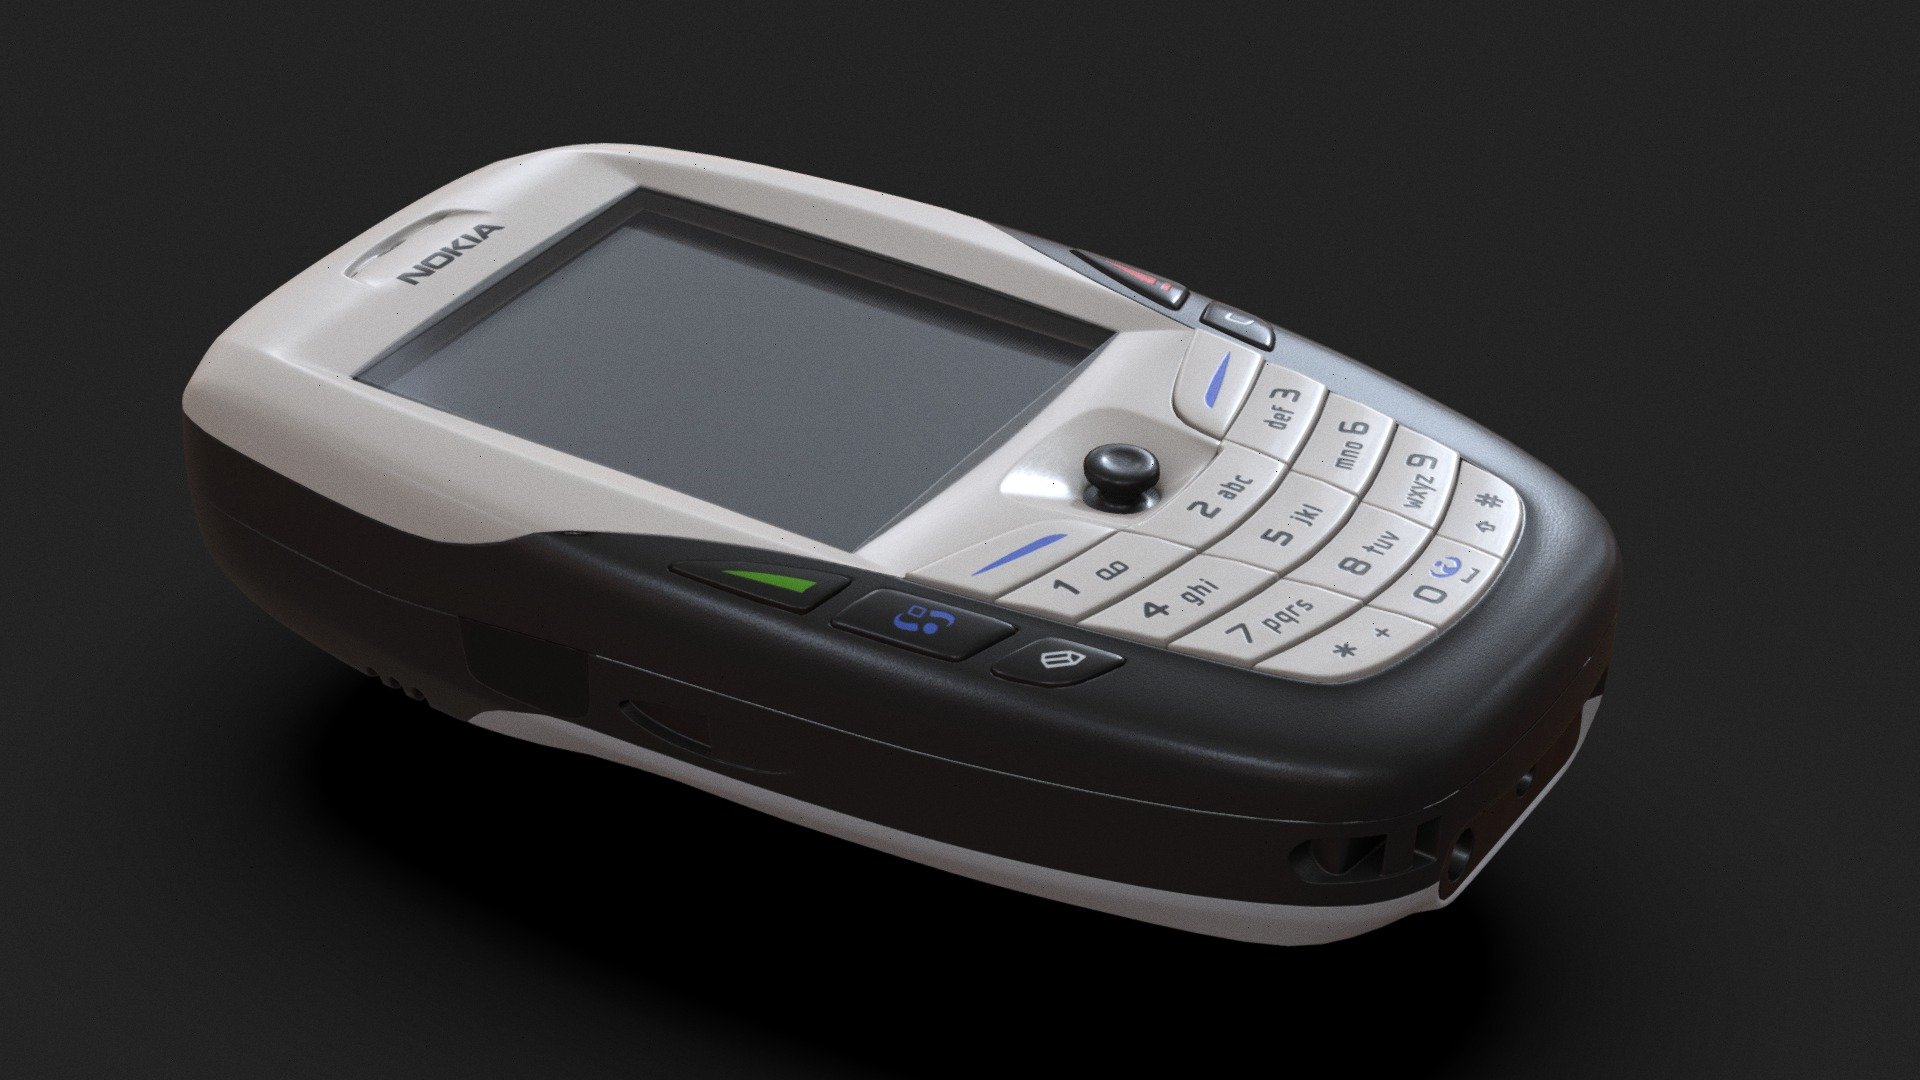 Nokia 6600 mobile phone - 3D model by g1xsa 3d model